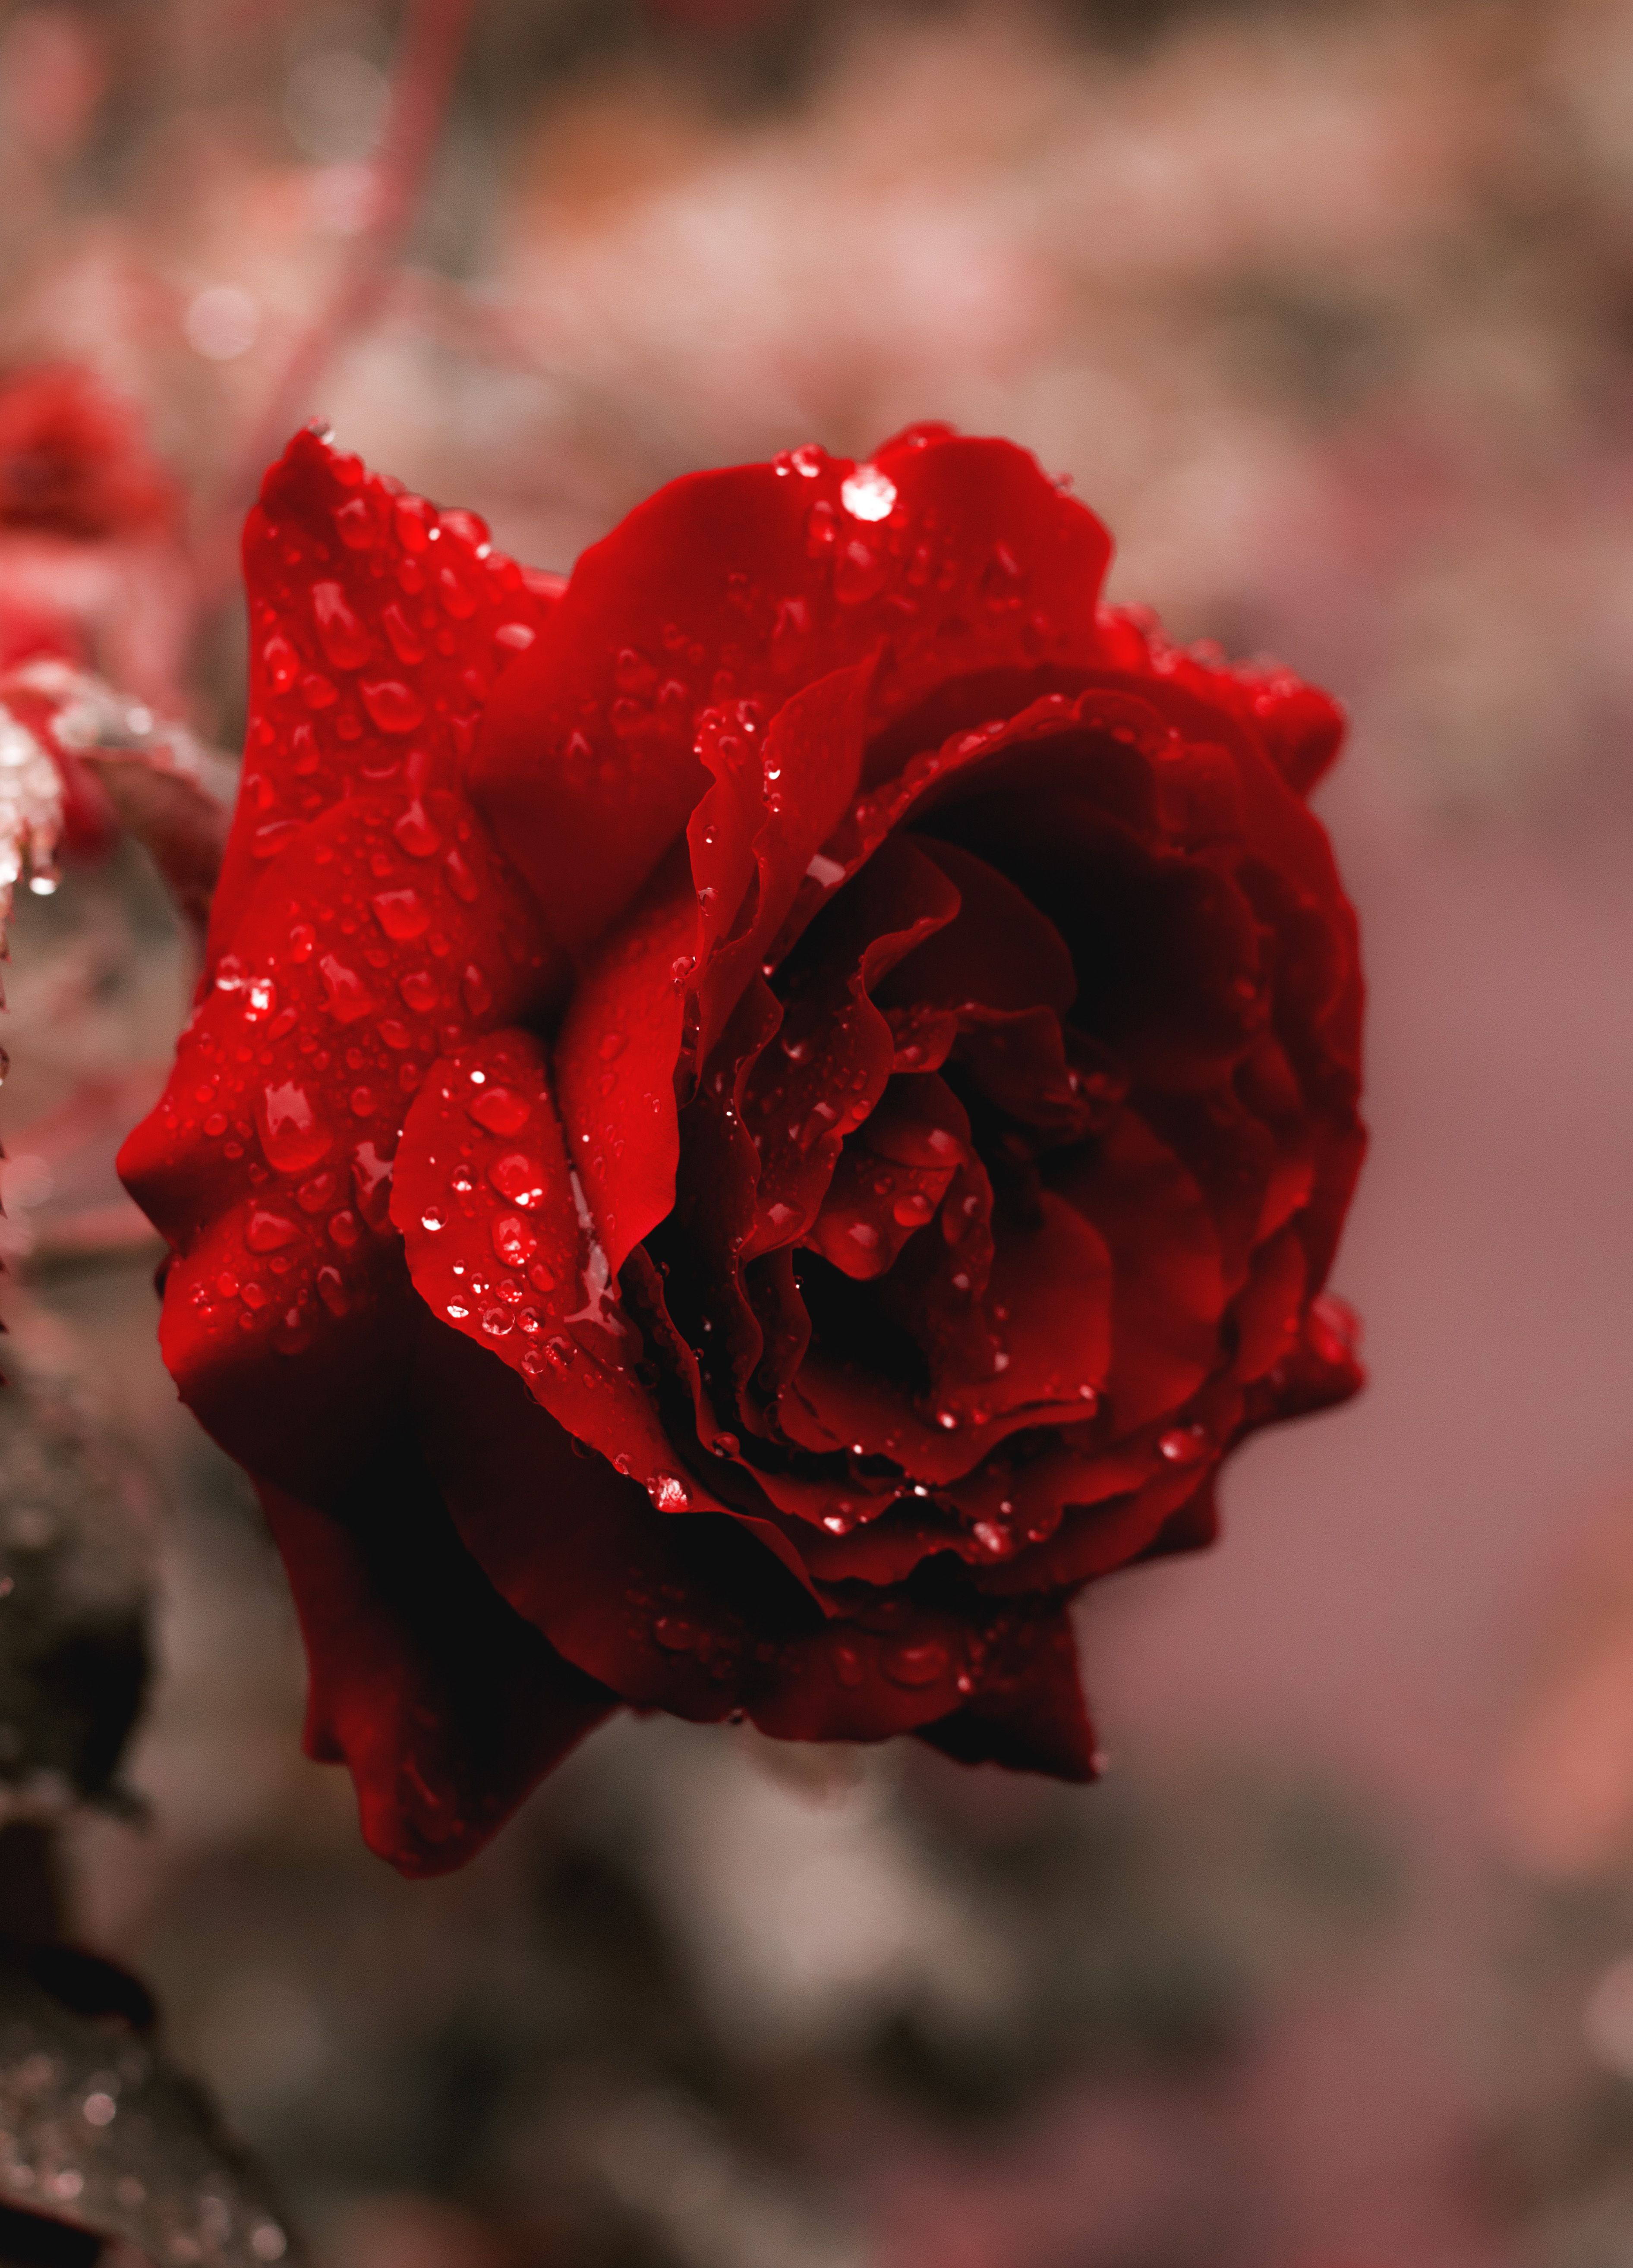 Rose Wallpaper: Free HD Download [HQ]